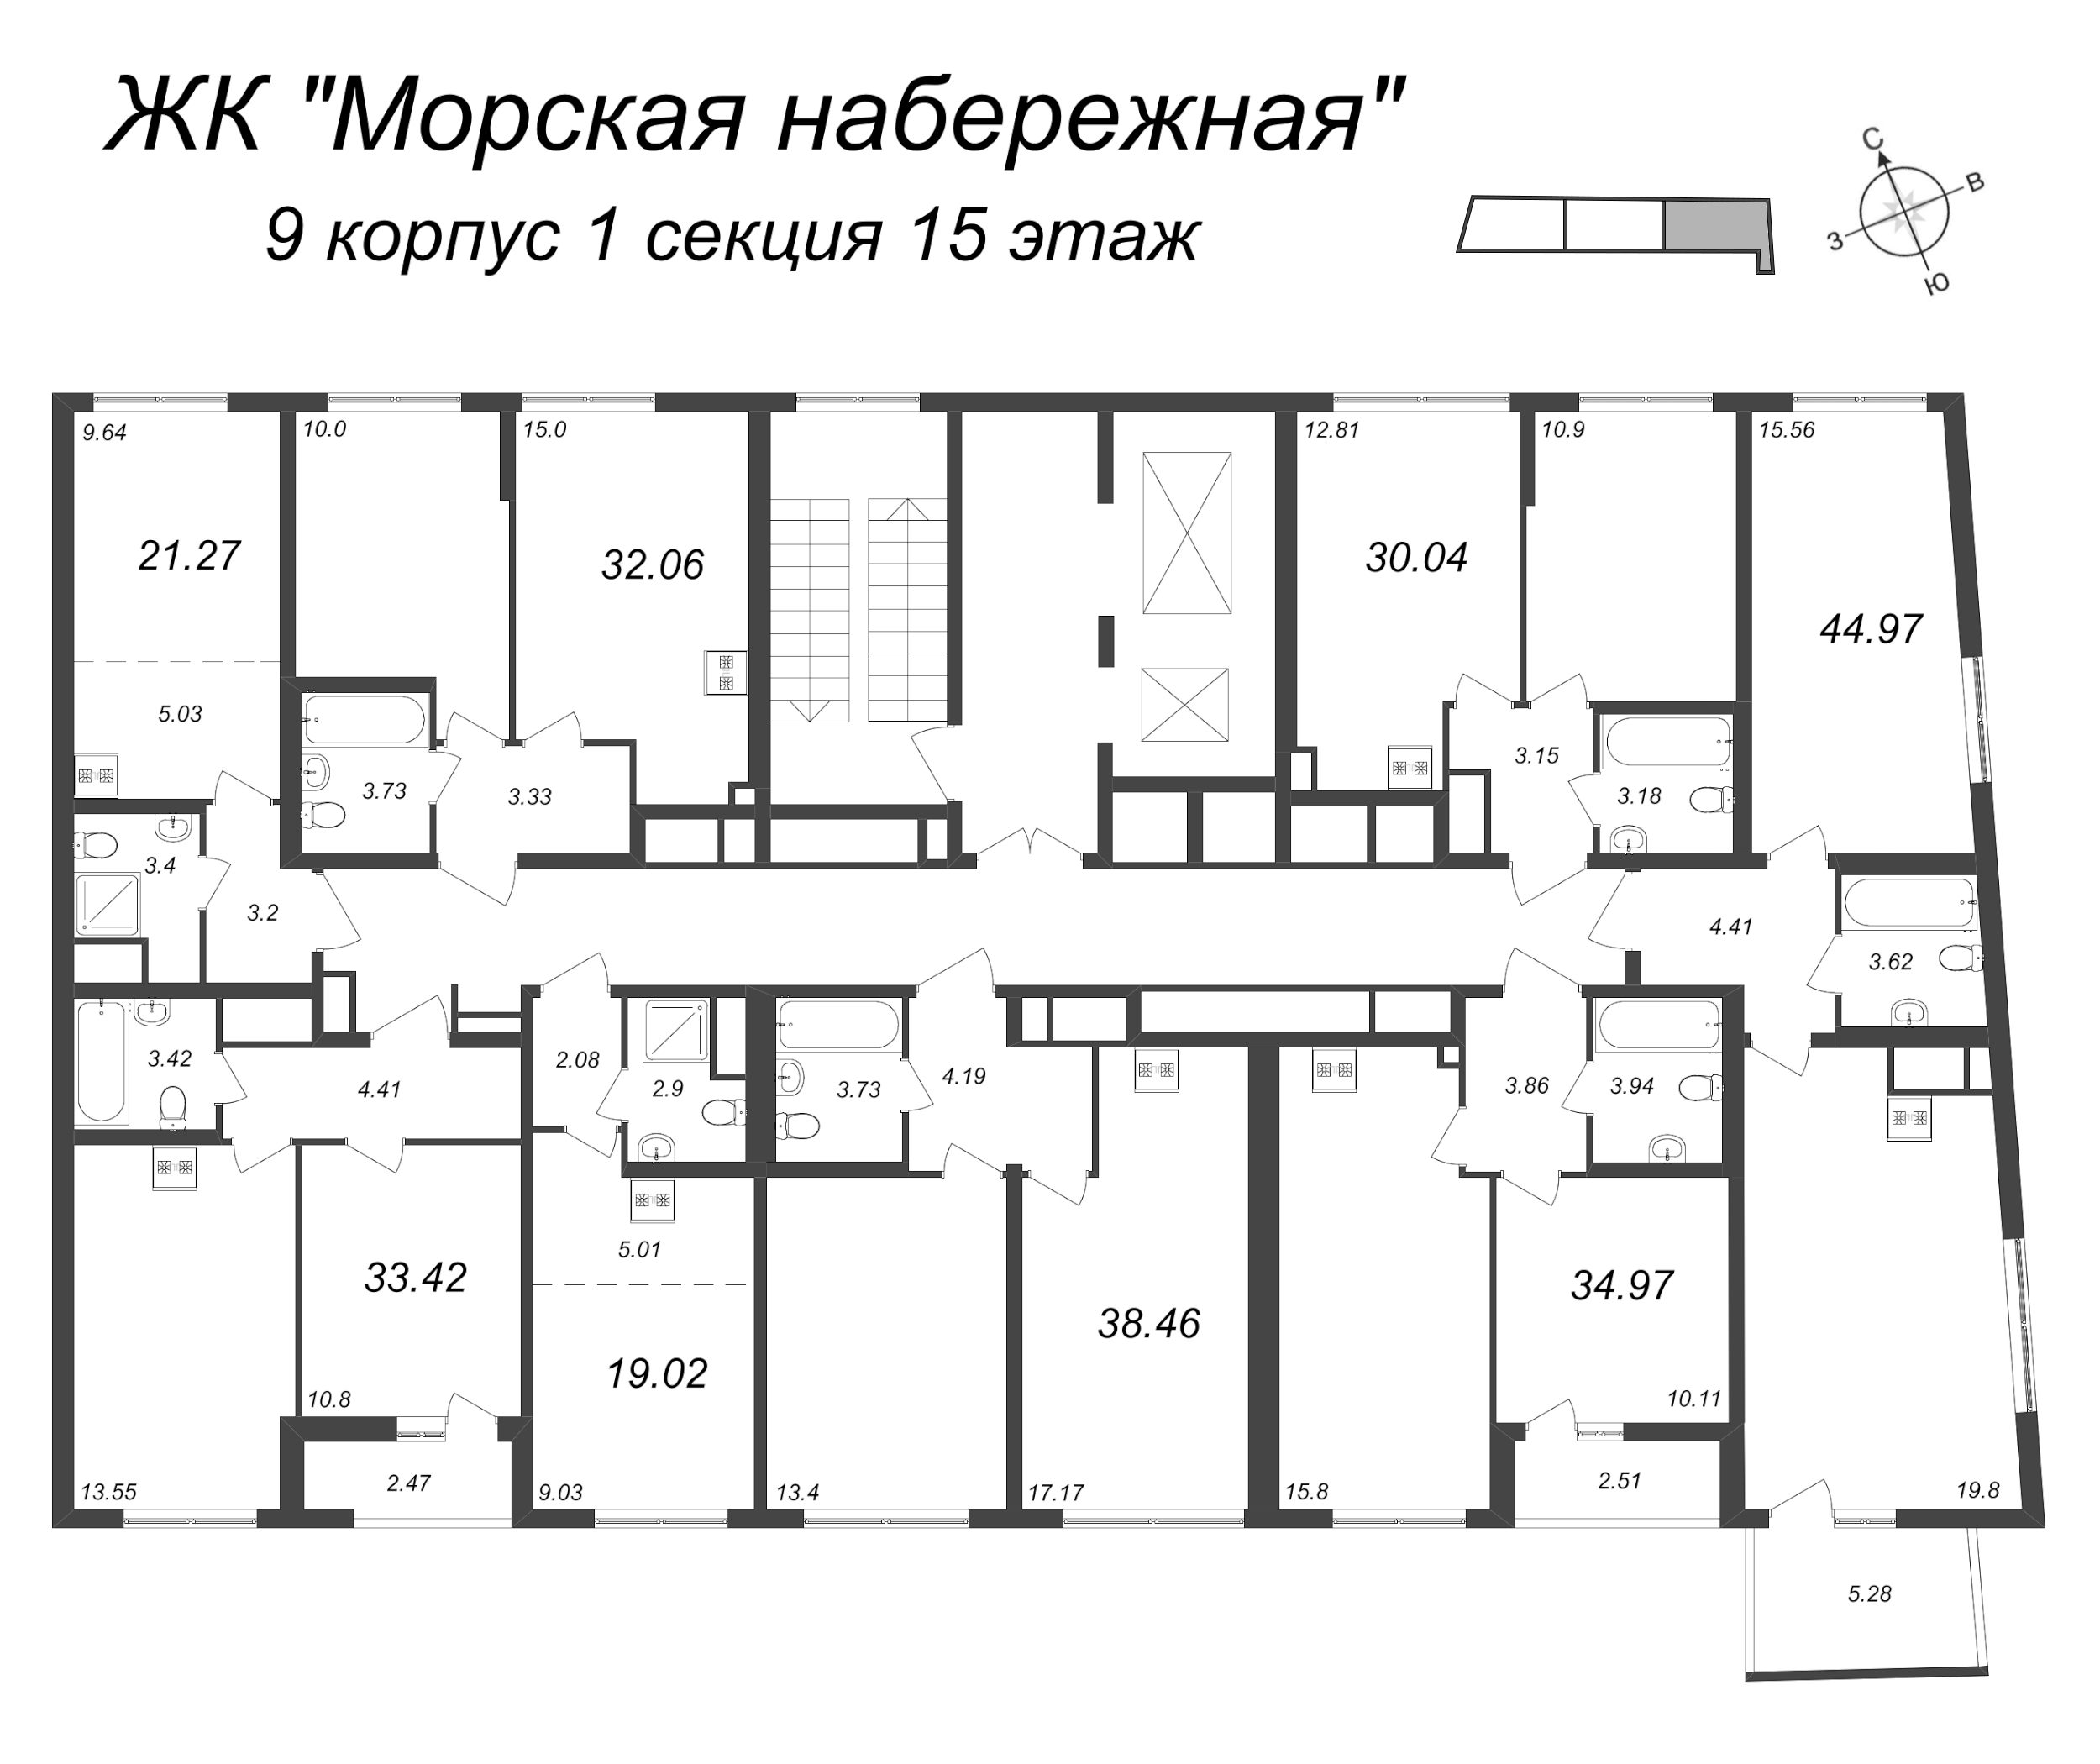 2-комнатная (Евро) квартира, 34.97 м² - планировка этажа